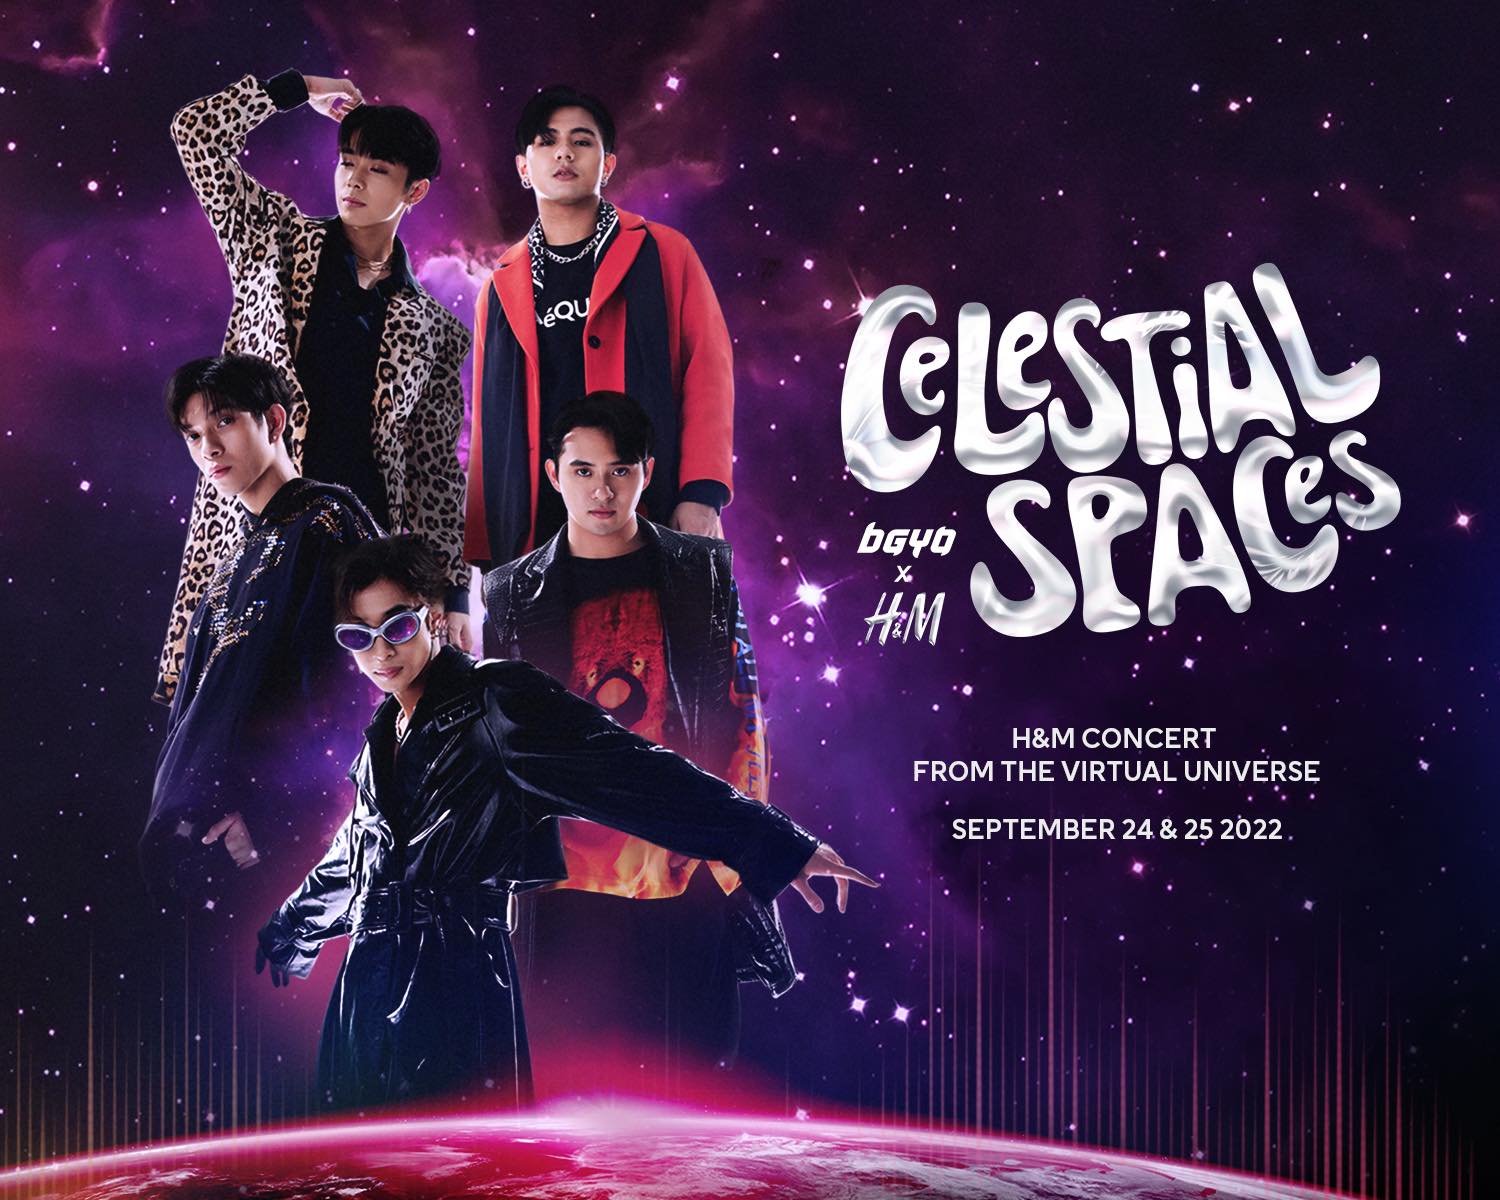 BGYO - Celestial Spaces concert poster